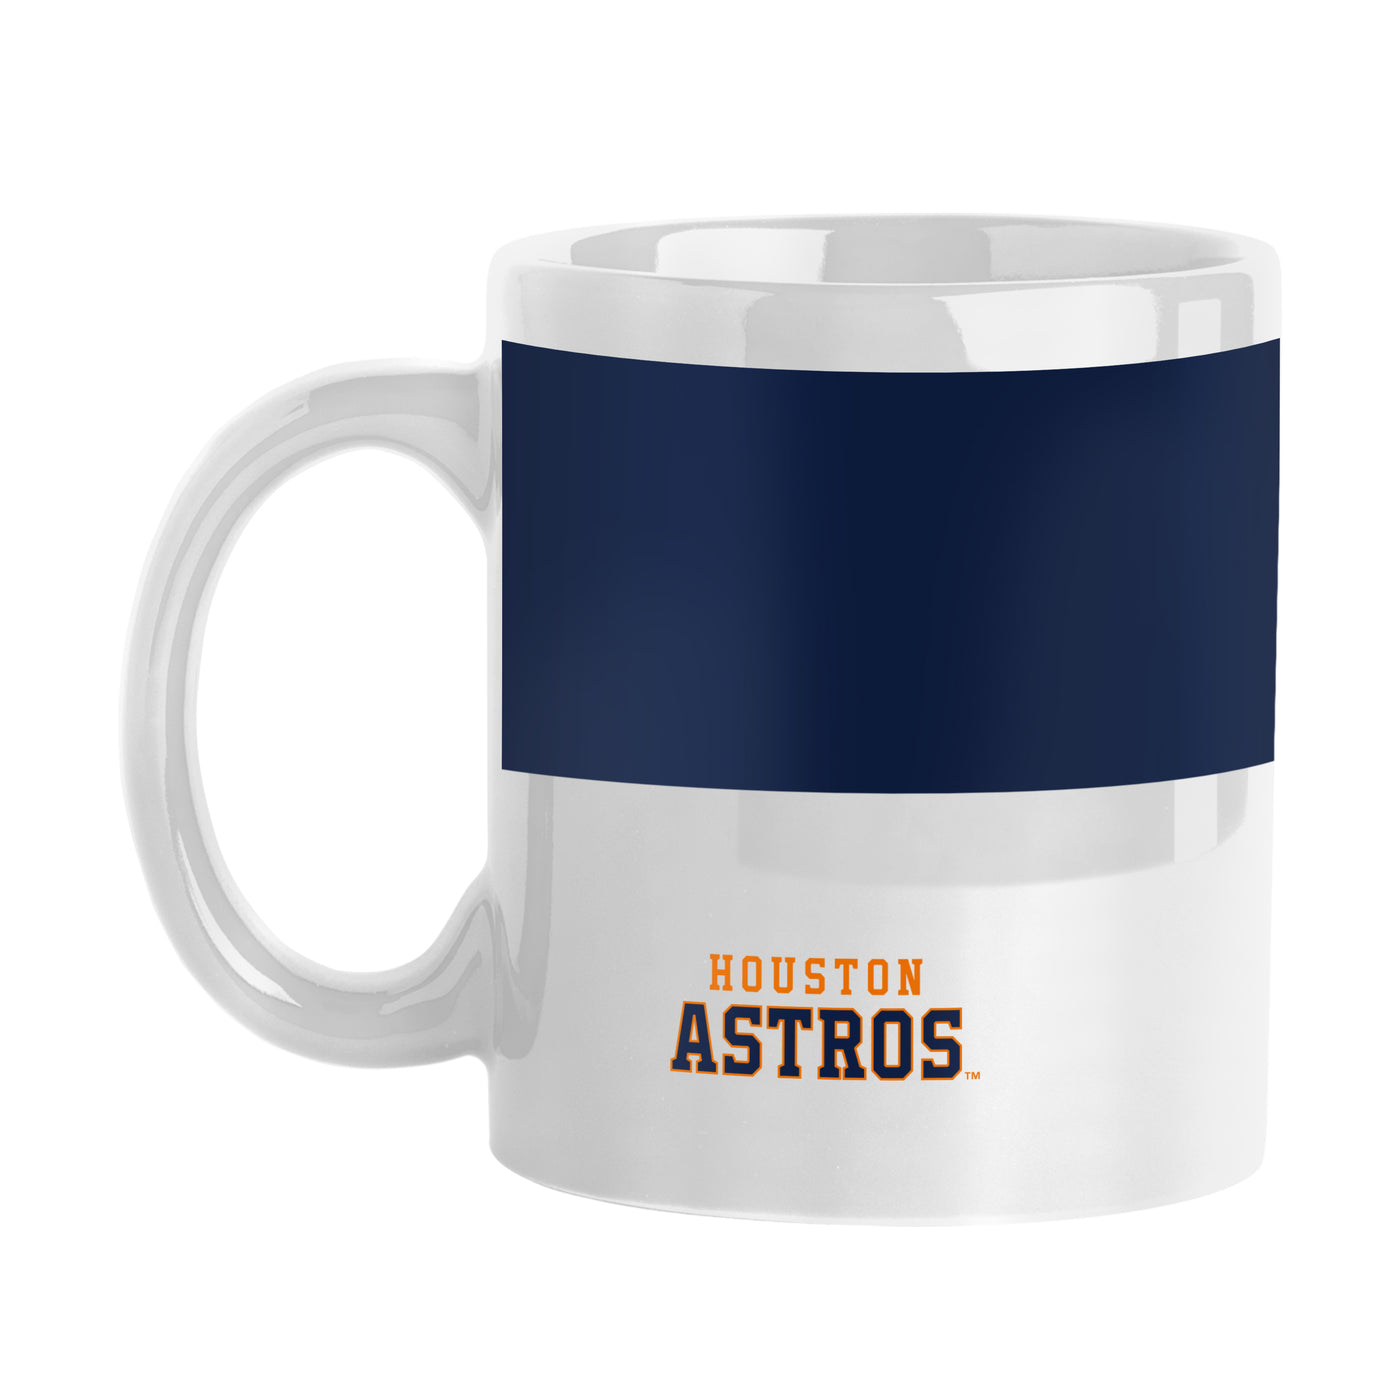 Houston Astros 11oz Colorblock Sublimated Mug